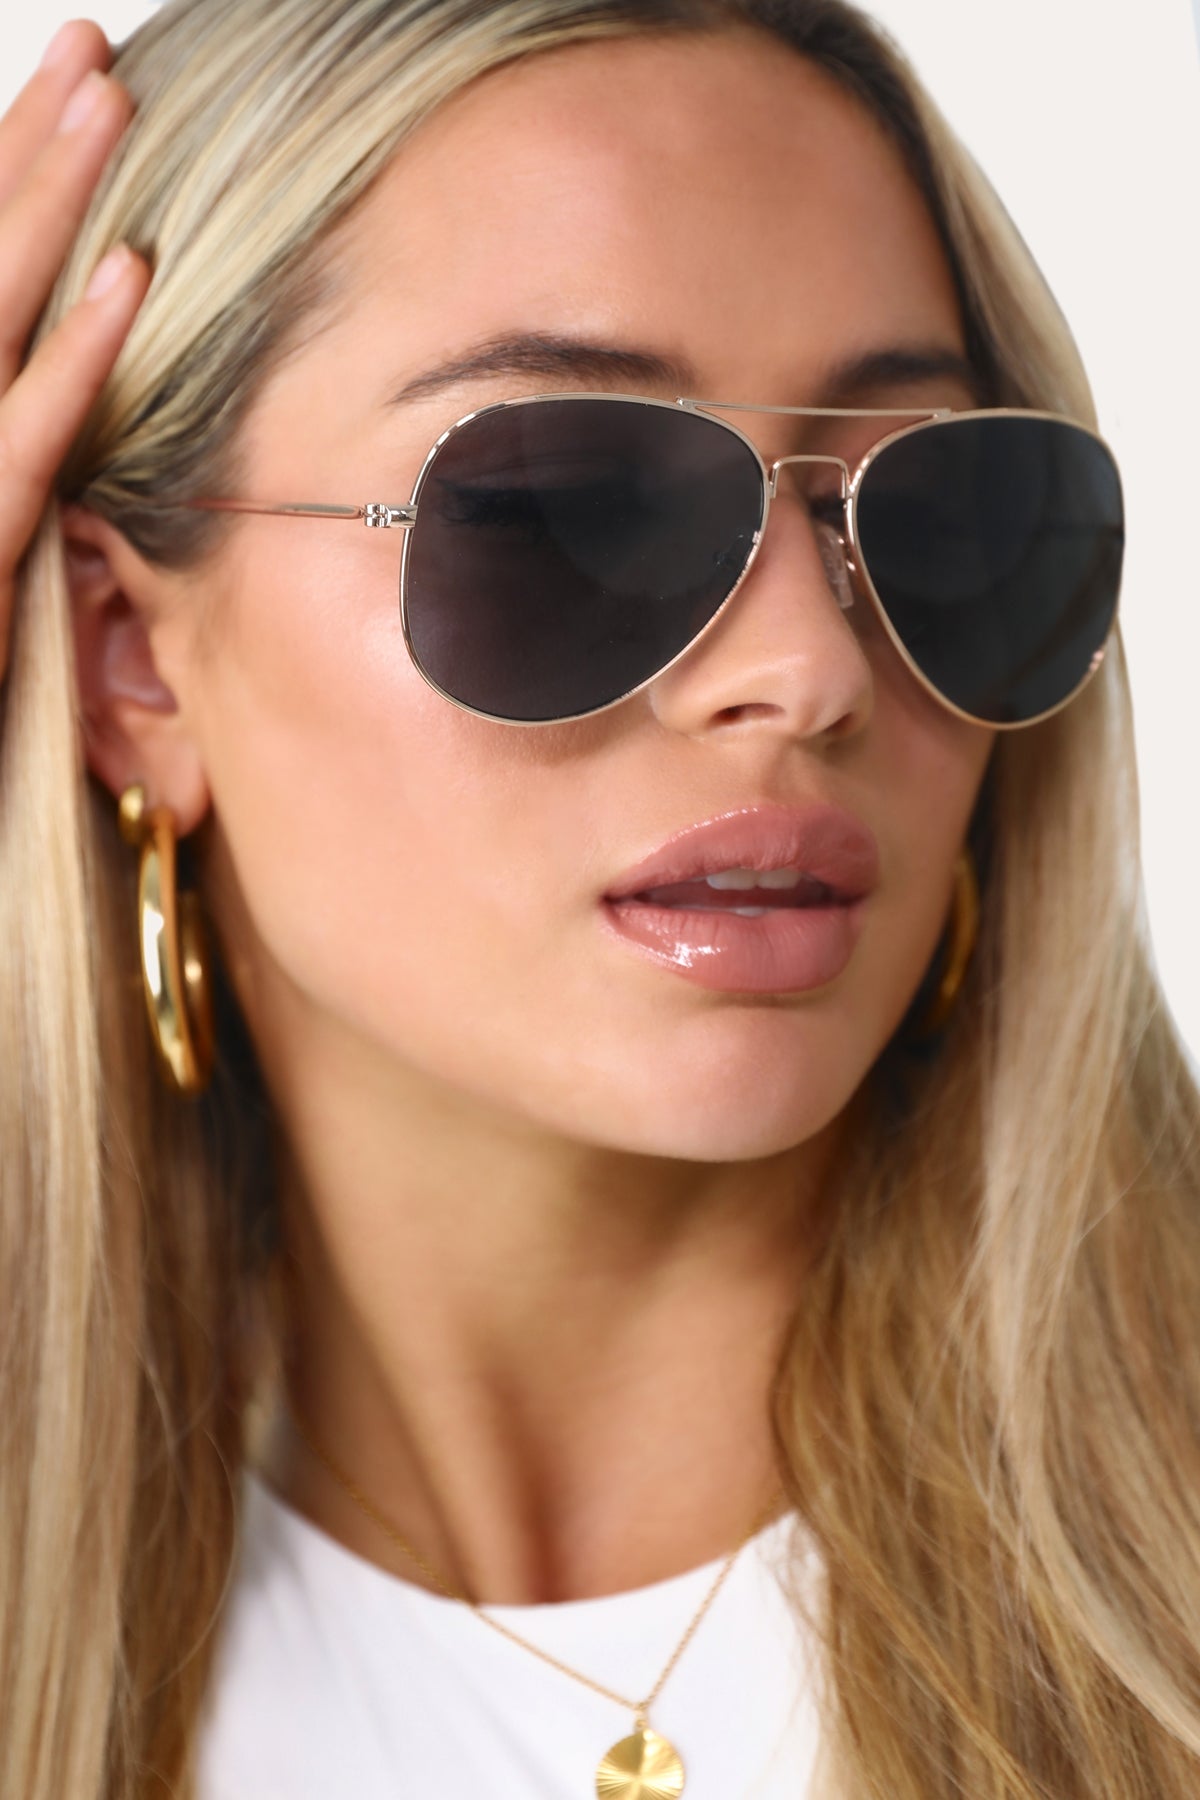 Model wearing The Sydney classic gold aviator sunglasses.